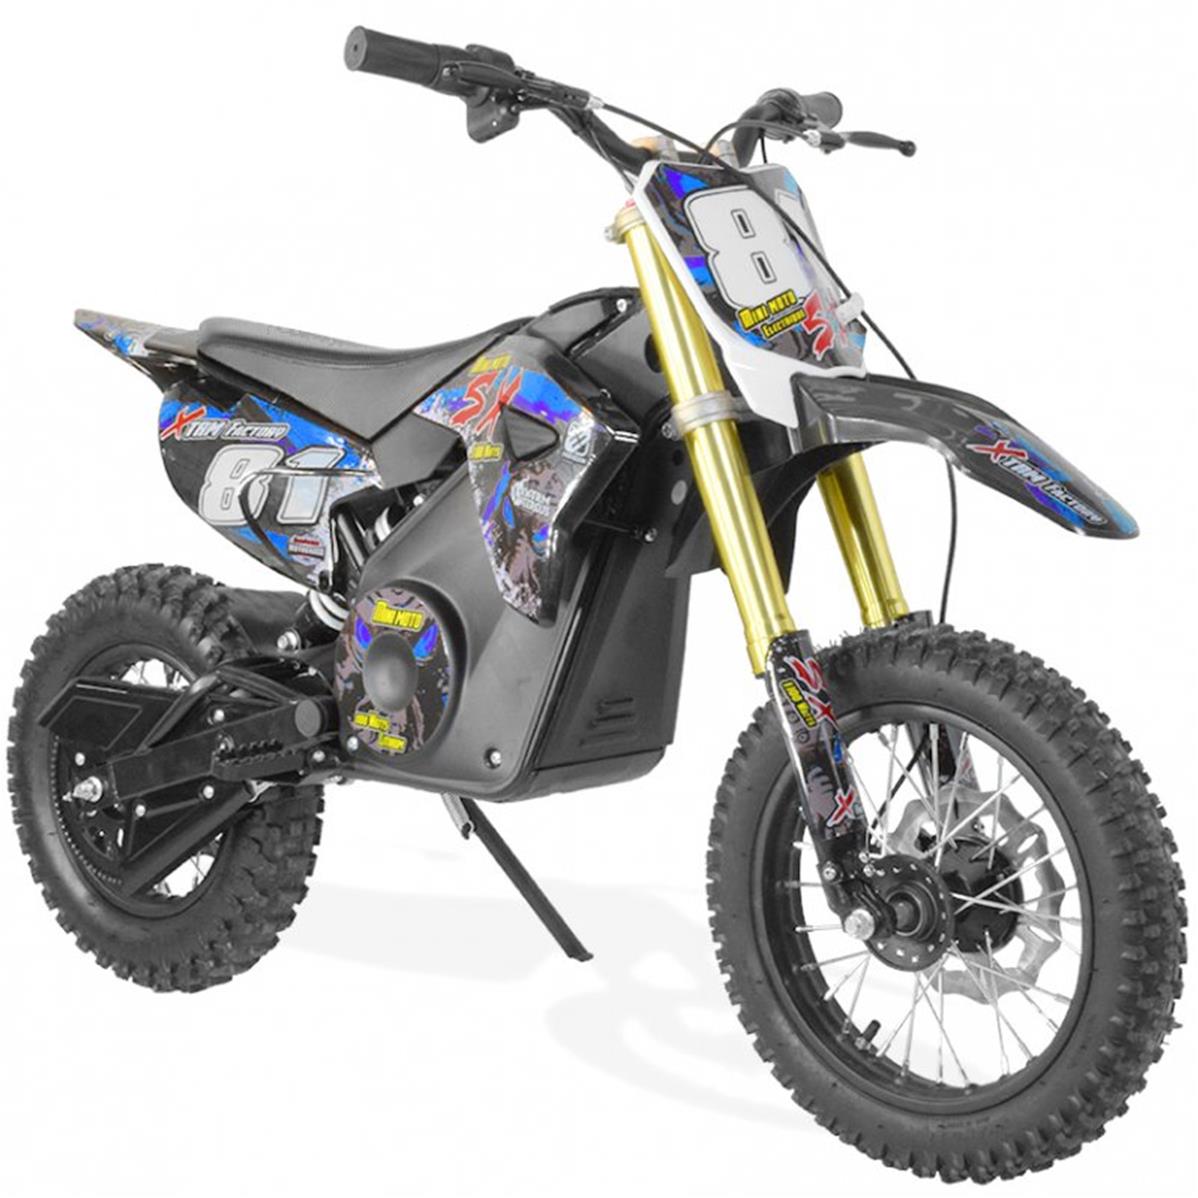 xtrem SX deluxe moto electrique cross 1300 watt enfant ado 48 volts